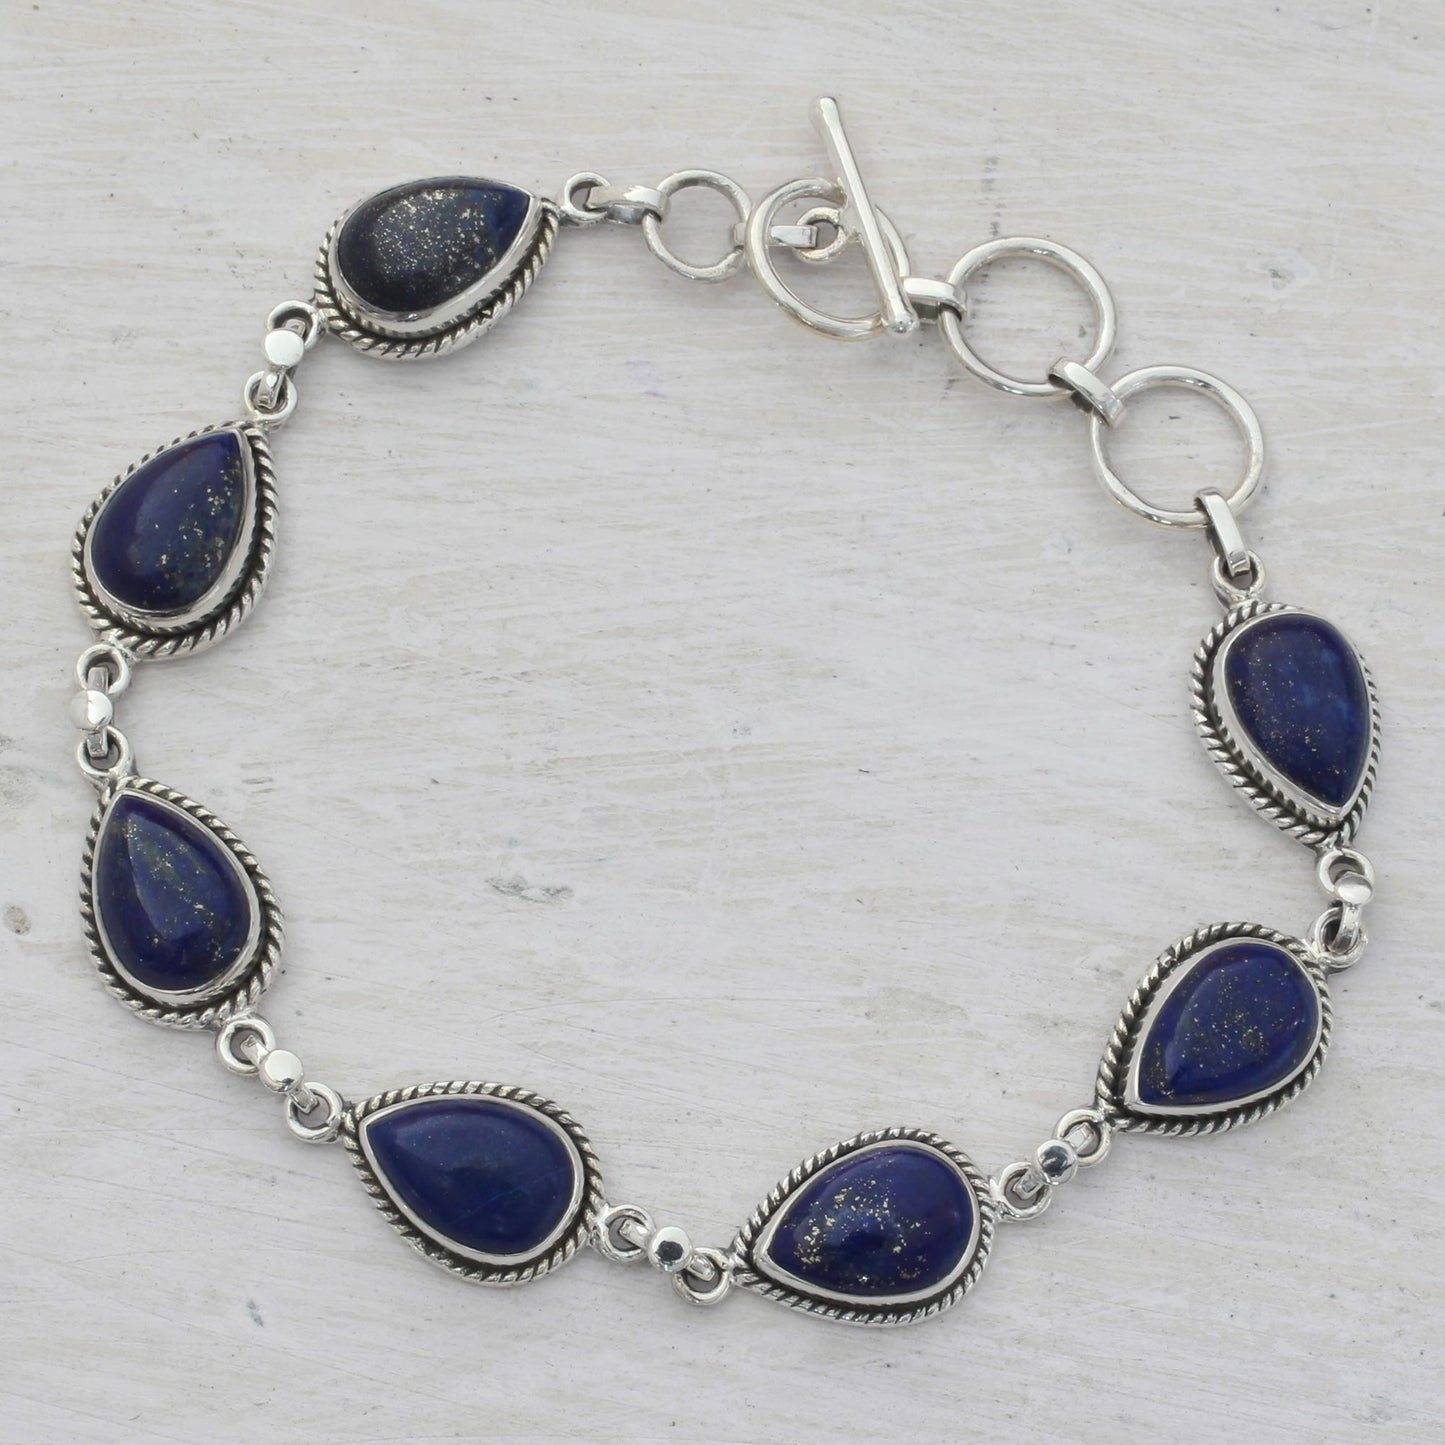 Caressing Rain in Blue Lapis Lazuli & Silver Link Bracelet